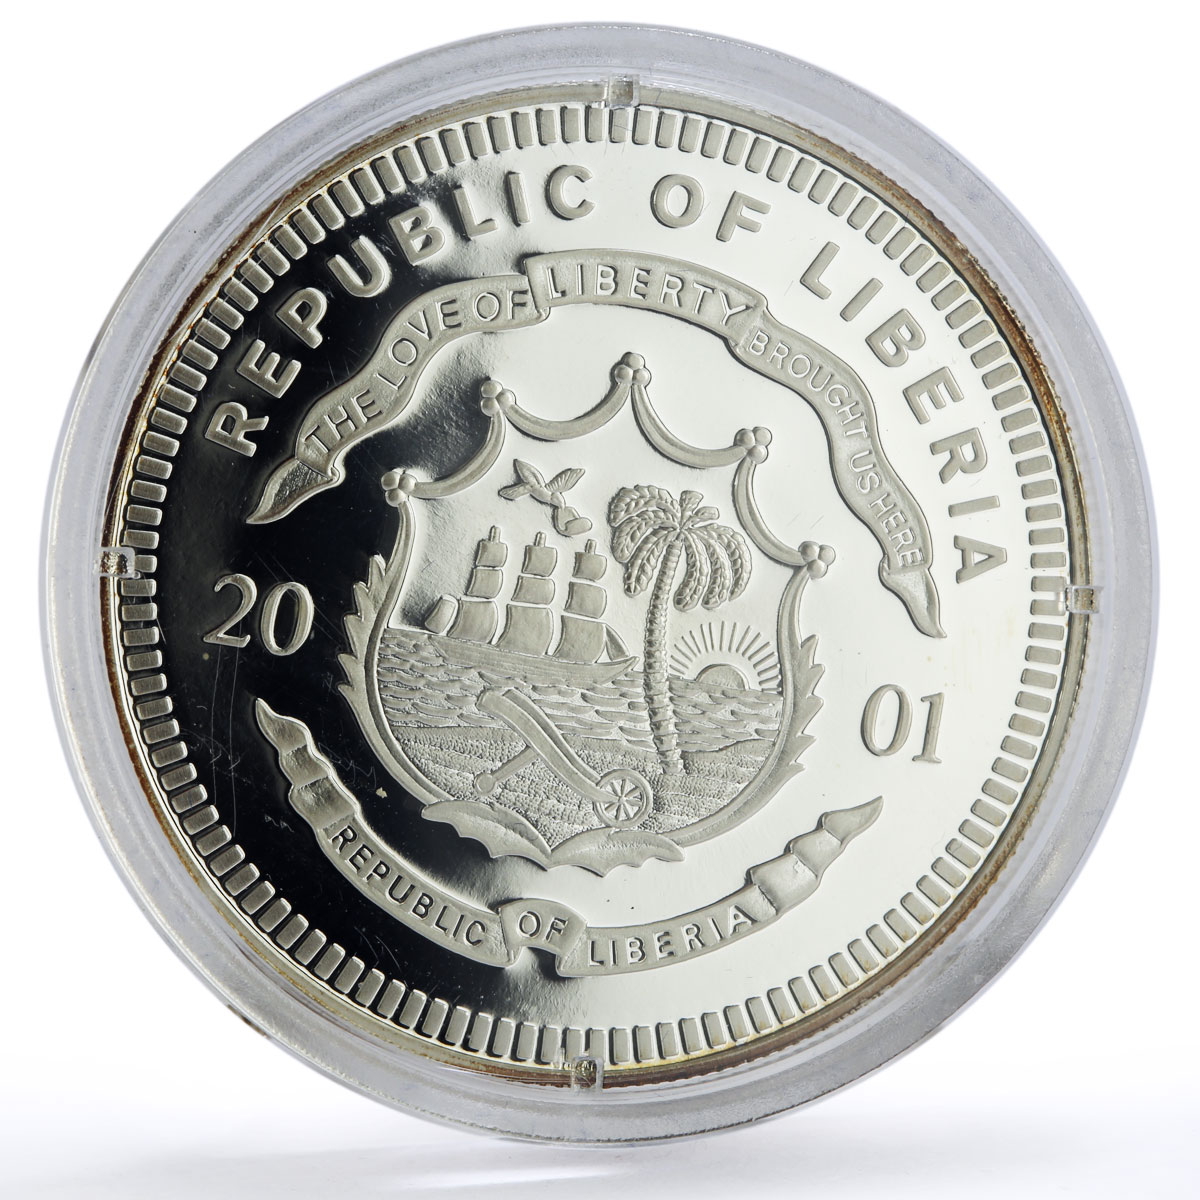 Liberia 20 dollars Trains Railway Locomotive Borsig 05002 silver coin 2001